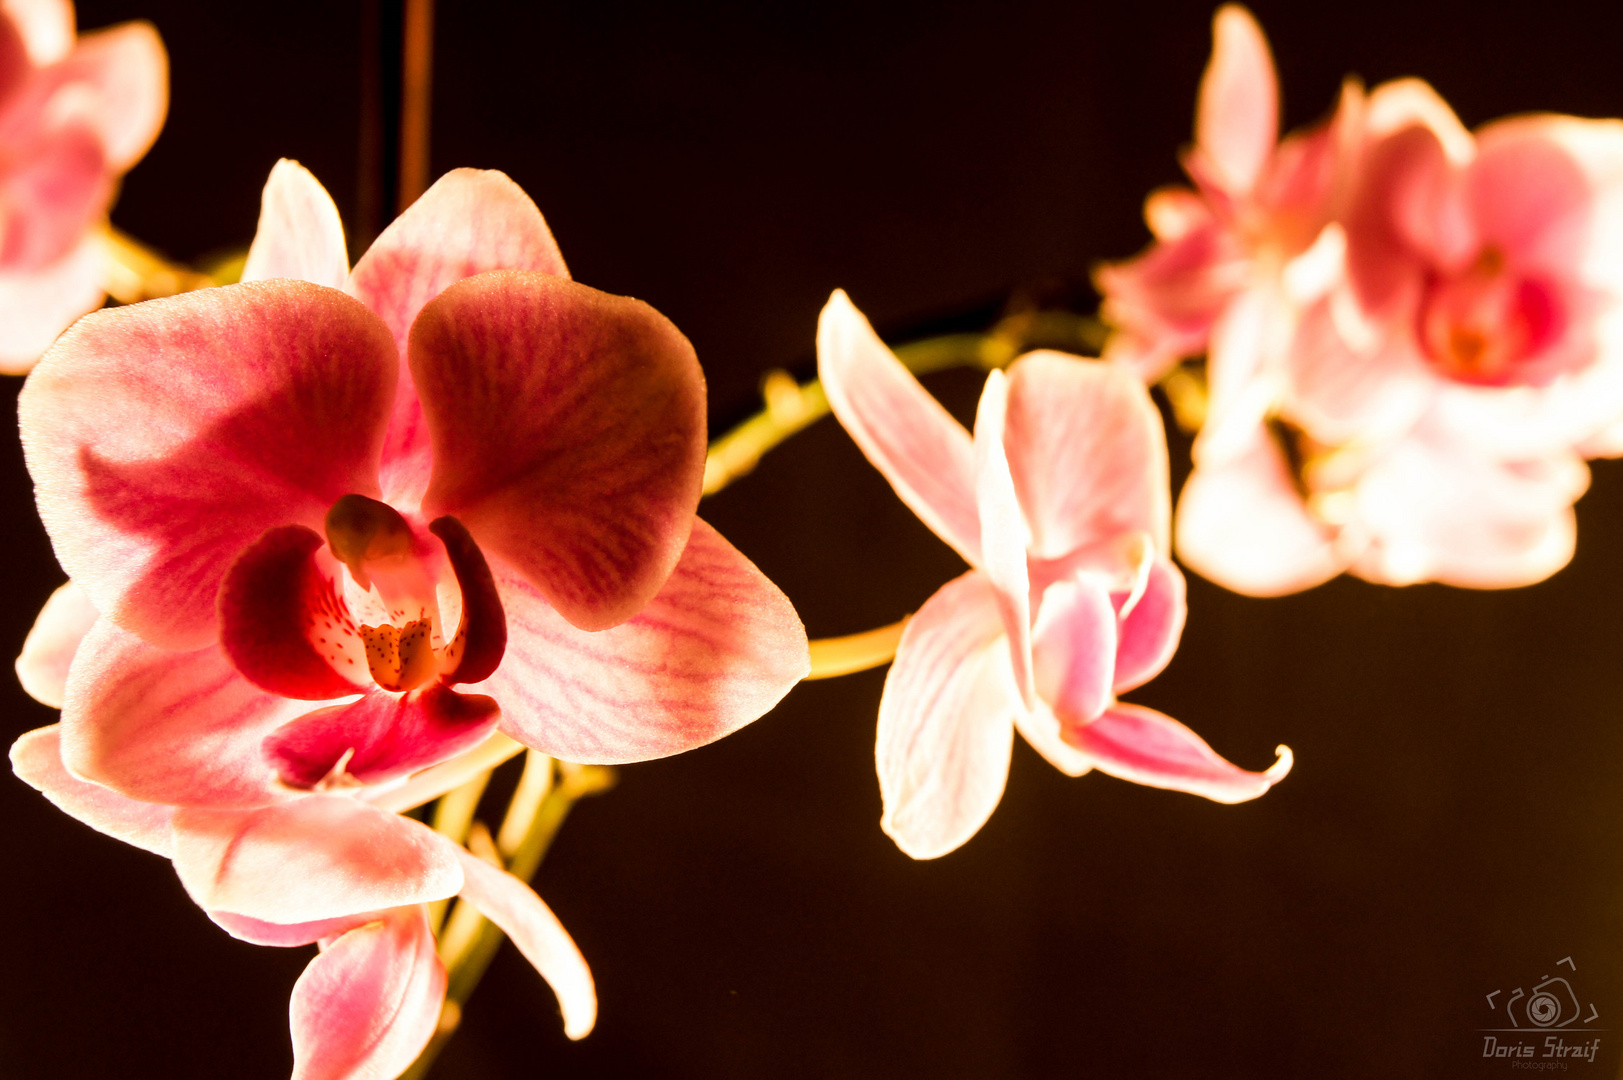 orchidee 1